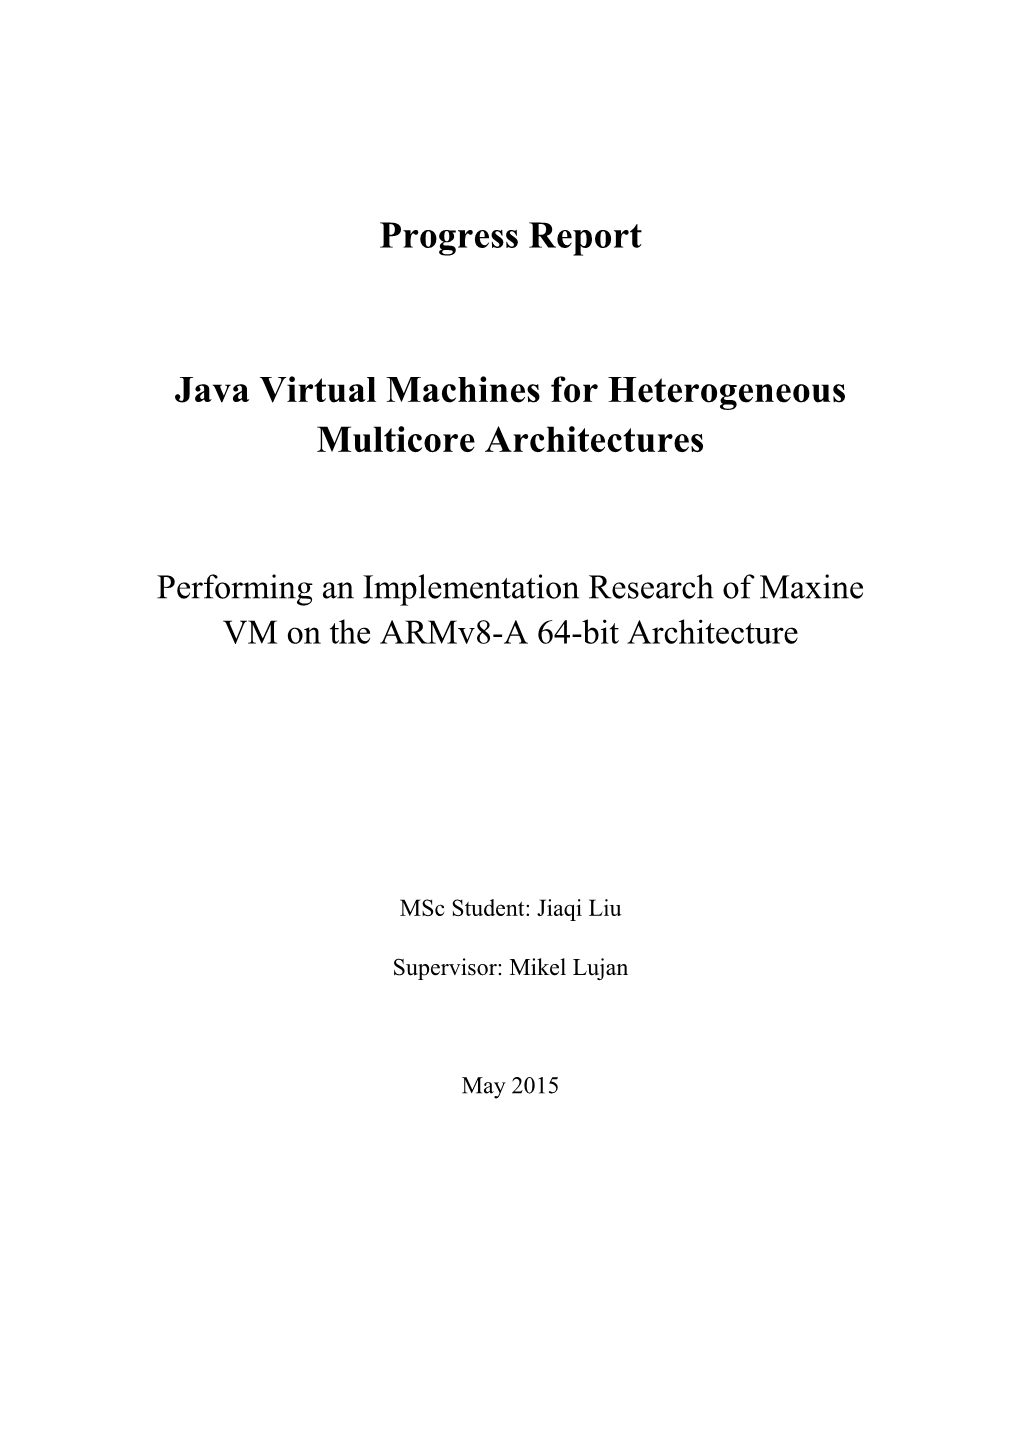 Progress Report Java Virtual Machines for Heterogeneous